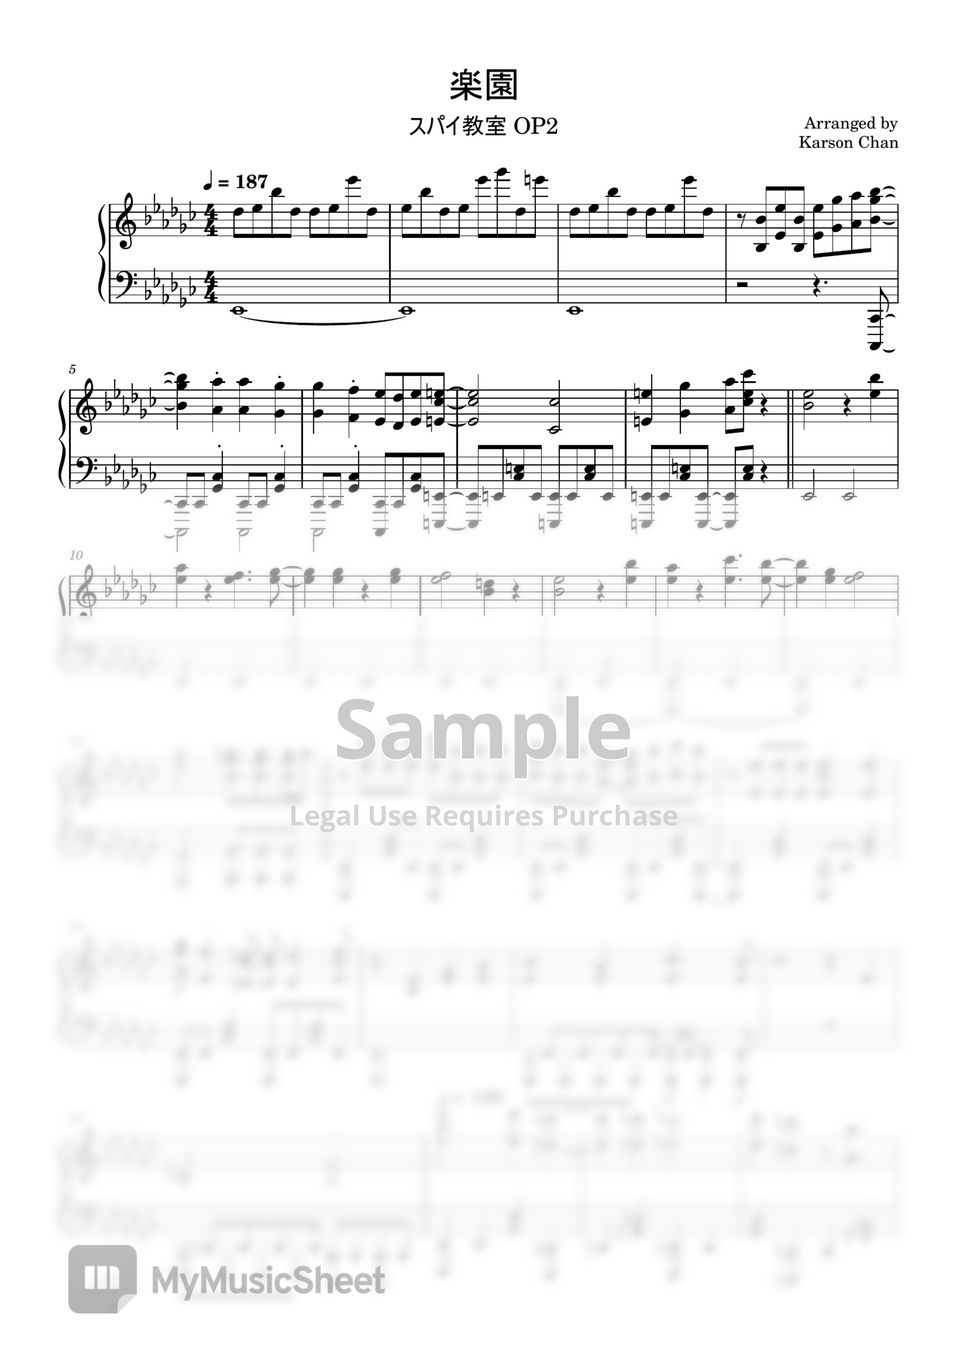 nonoc - 楽園 Full Version (スパイ教室 OP2) --WITH MIDI+WAV+Musescore Secret Link by Karson Chan